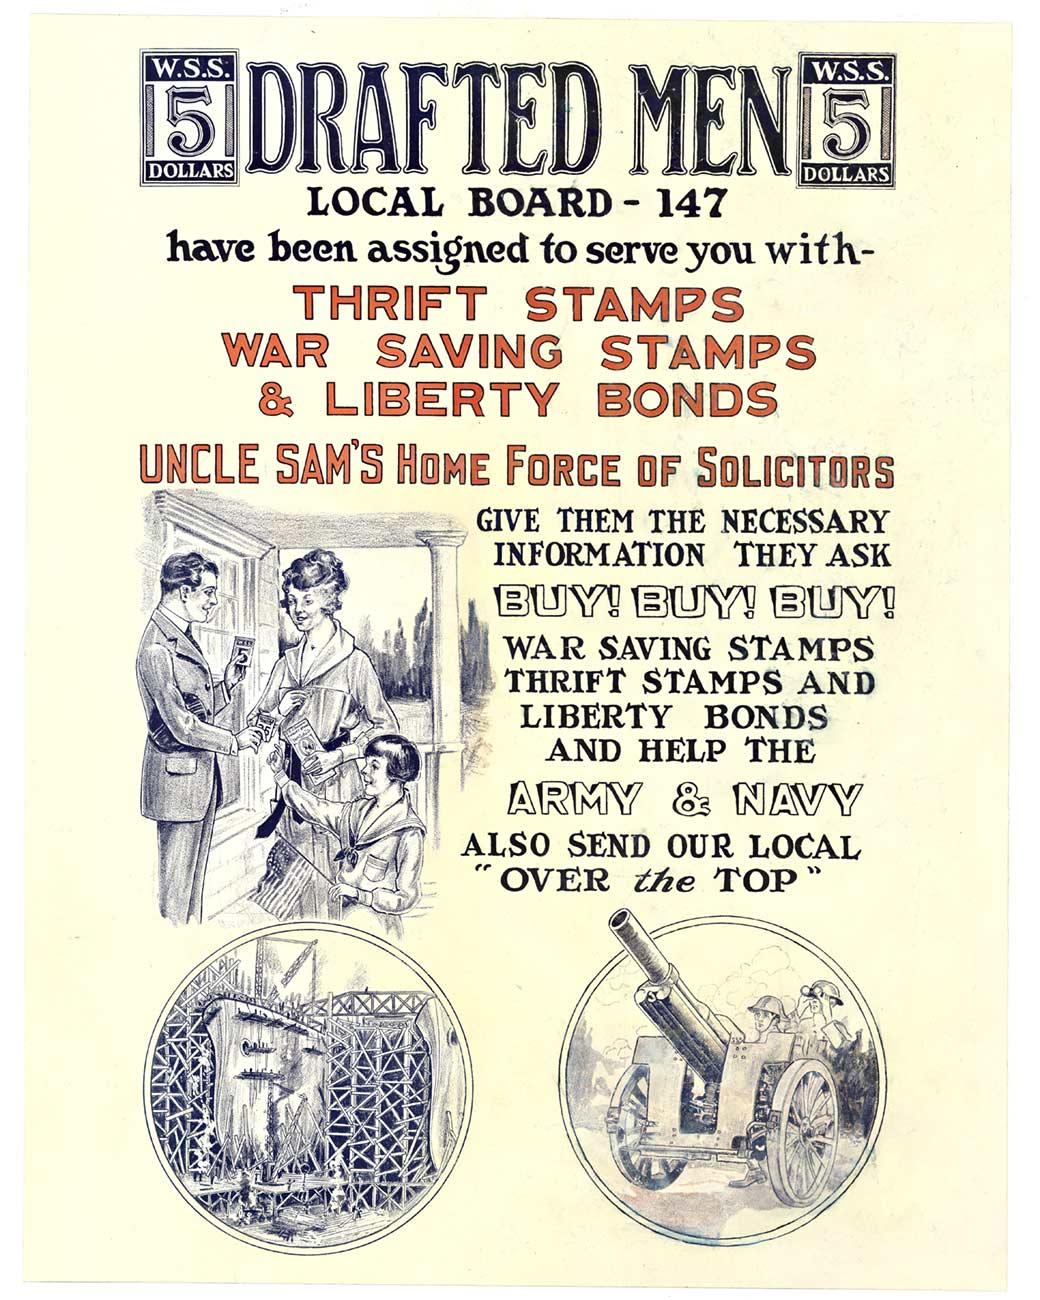 Originales amerikanisches Vintage-Poster, „Drafted Men, War Savings Stamps“, 5 Dollar